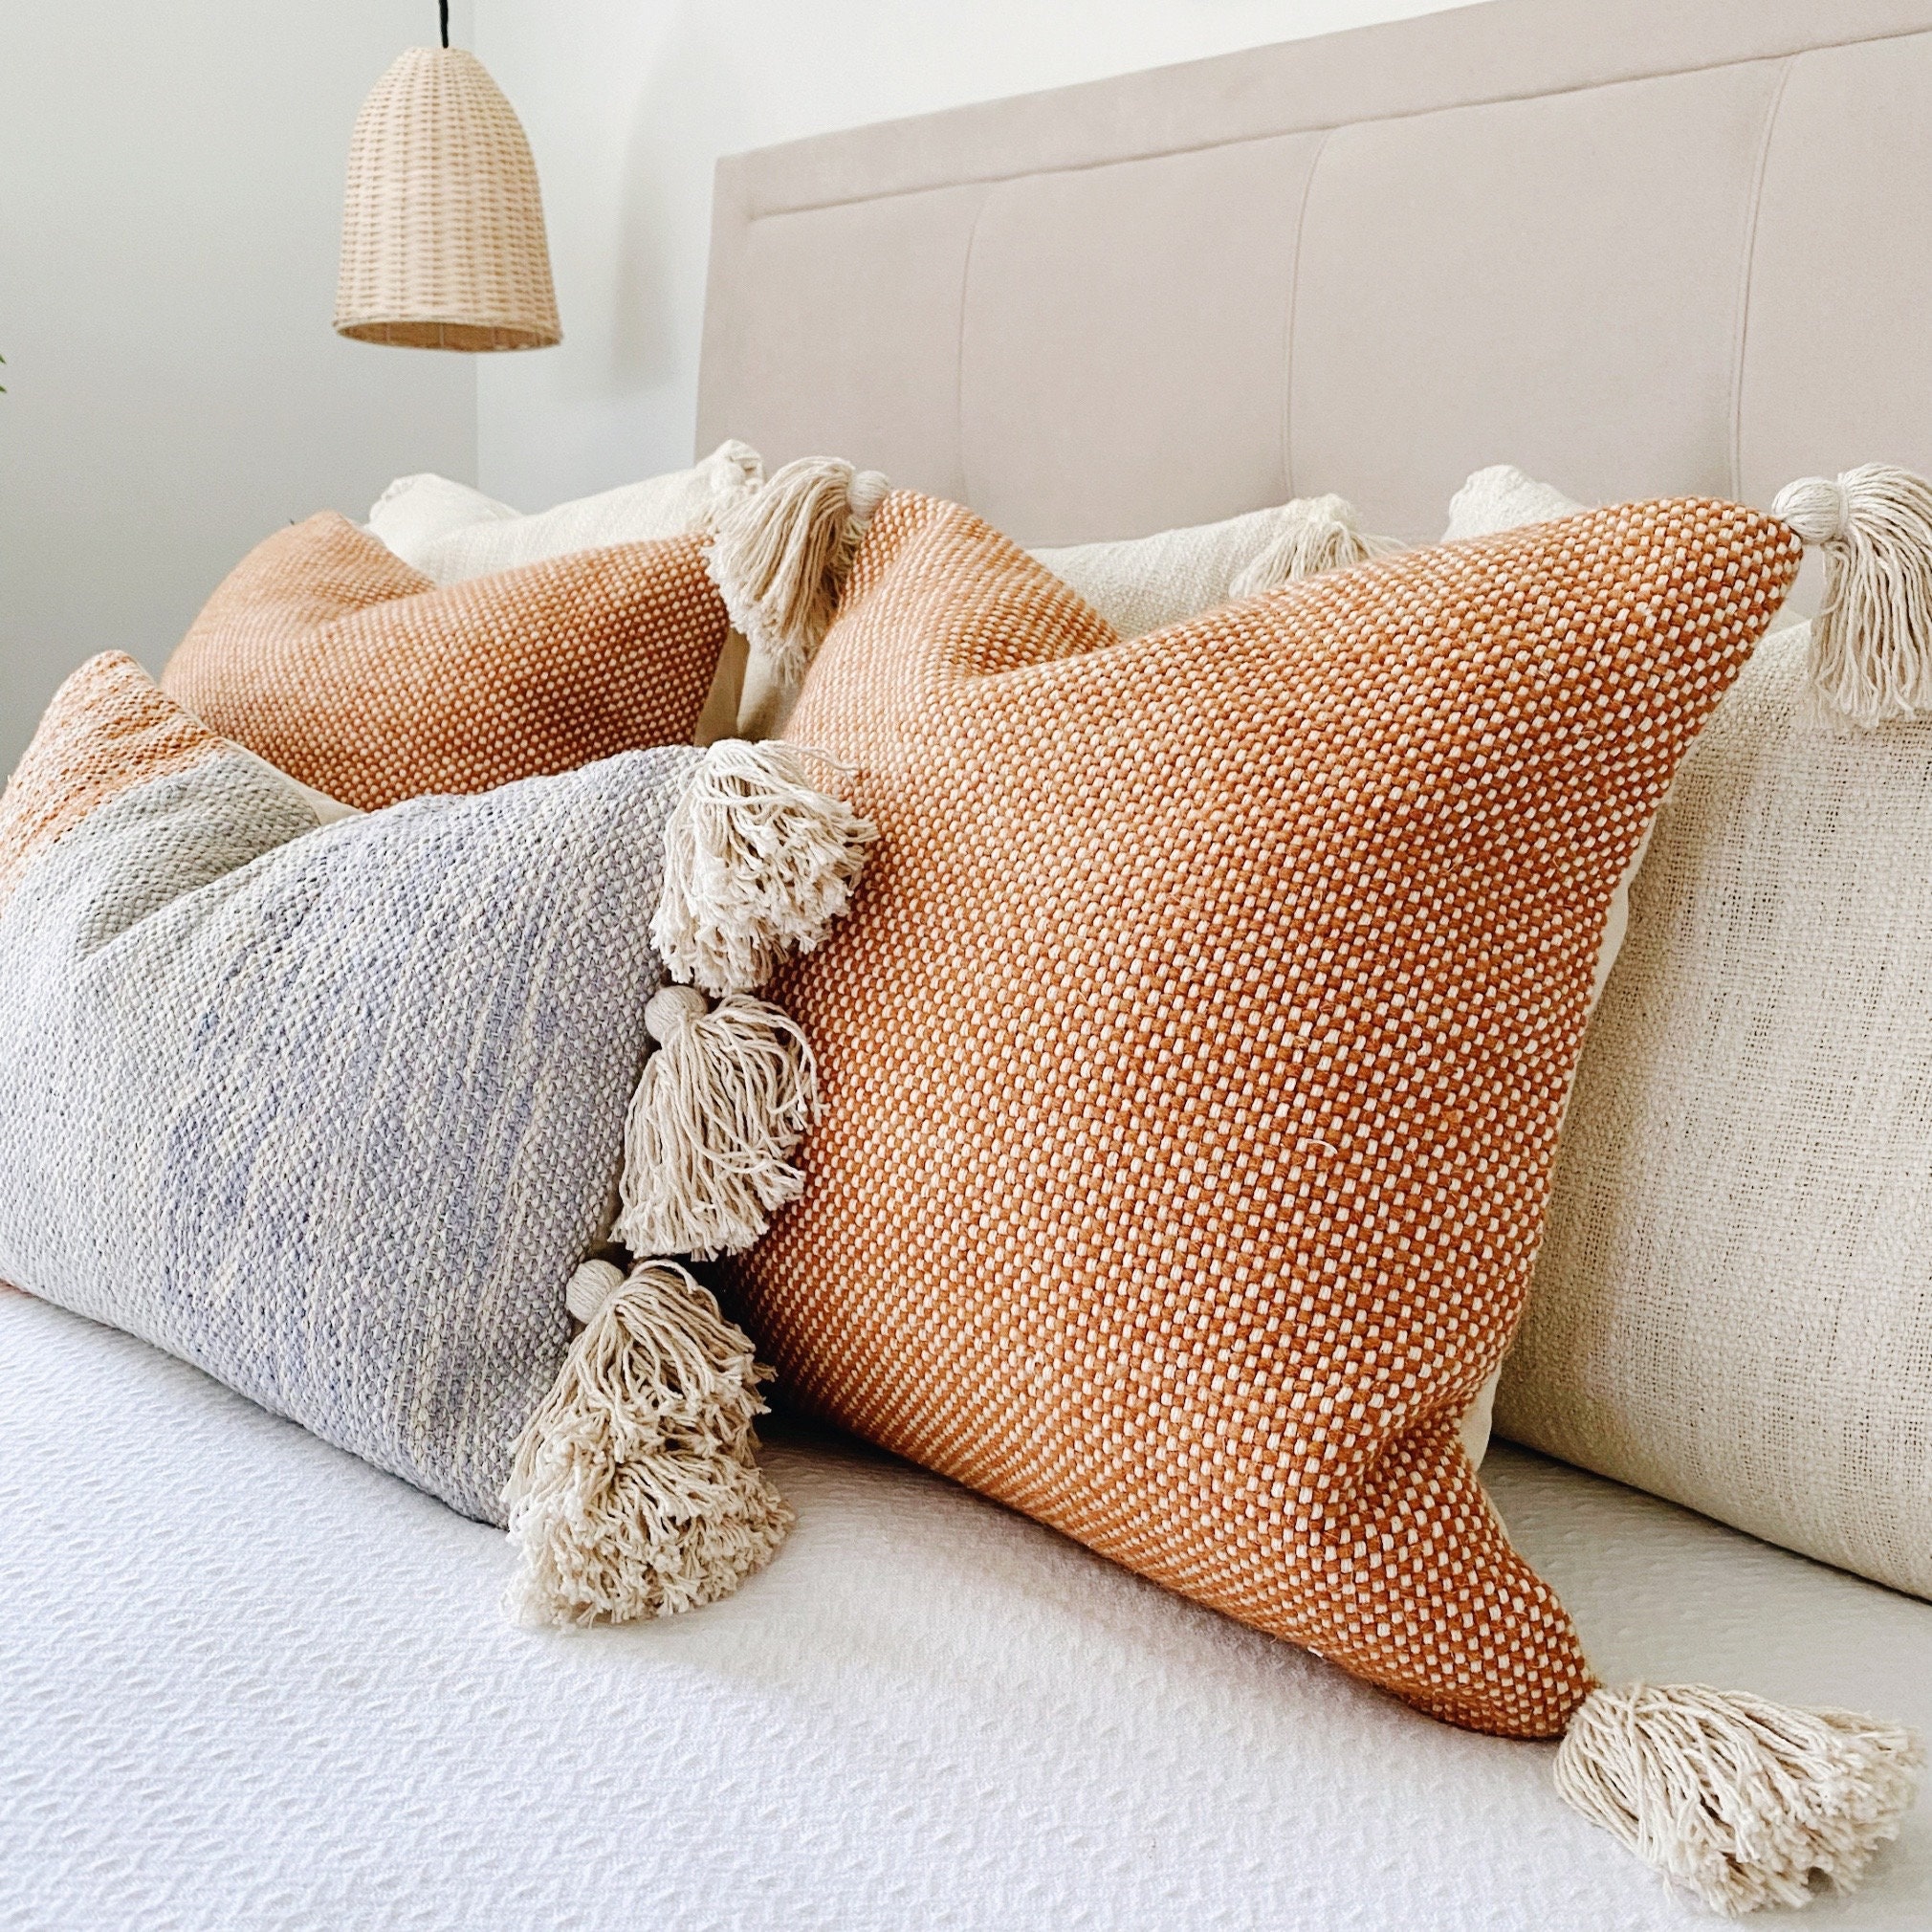 Throw Pillows, Decorative Pillows